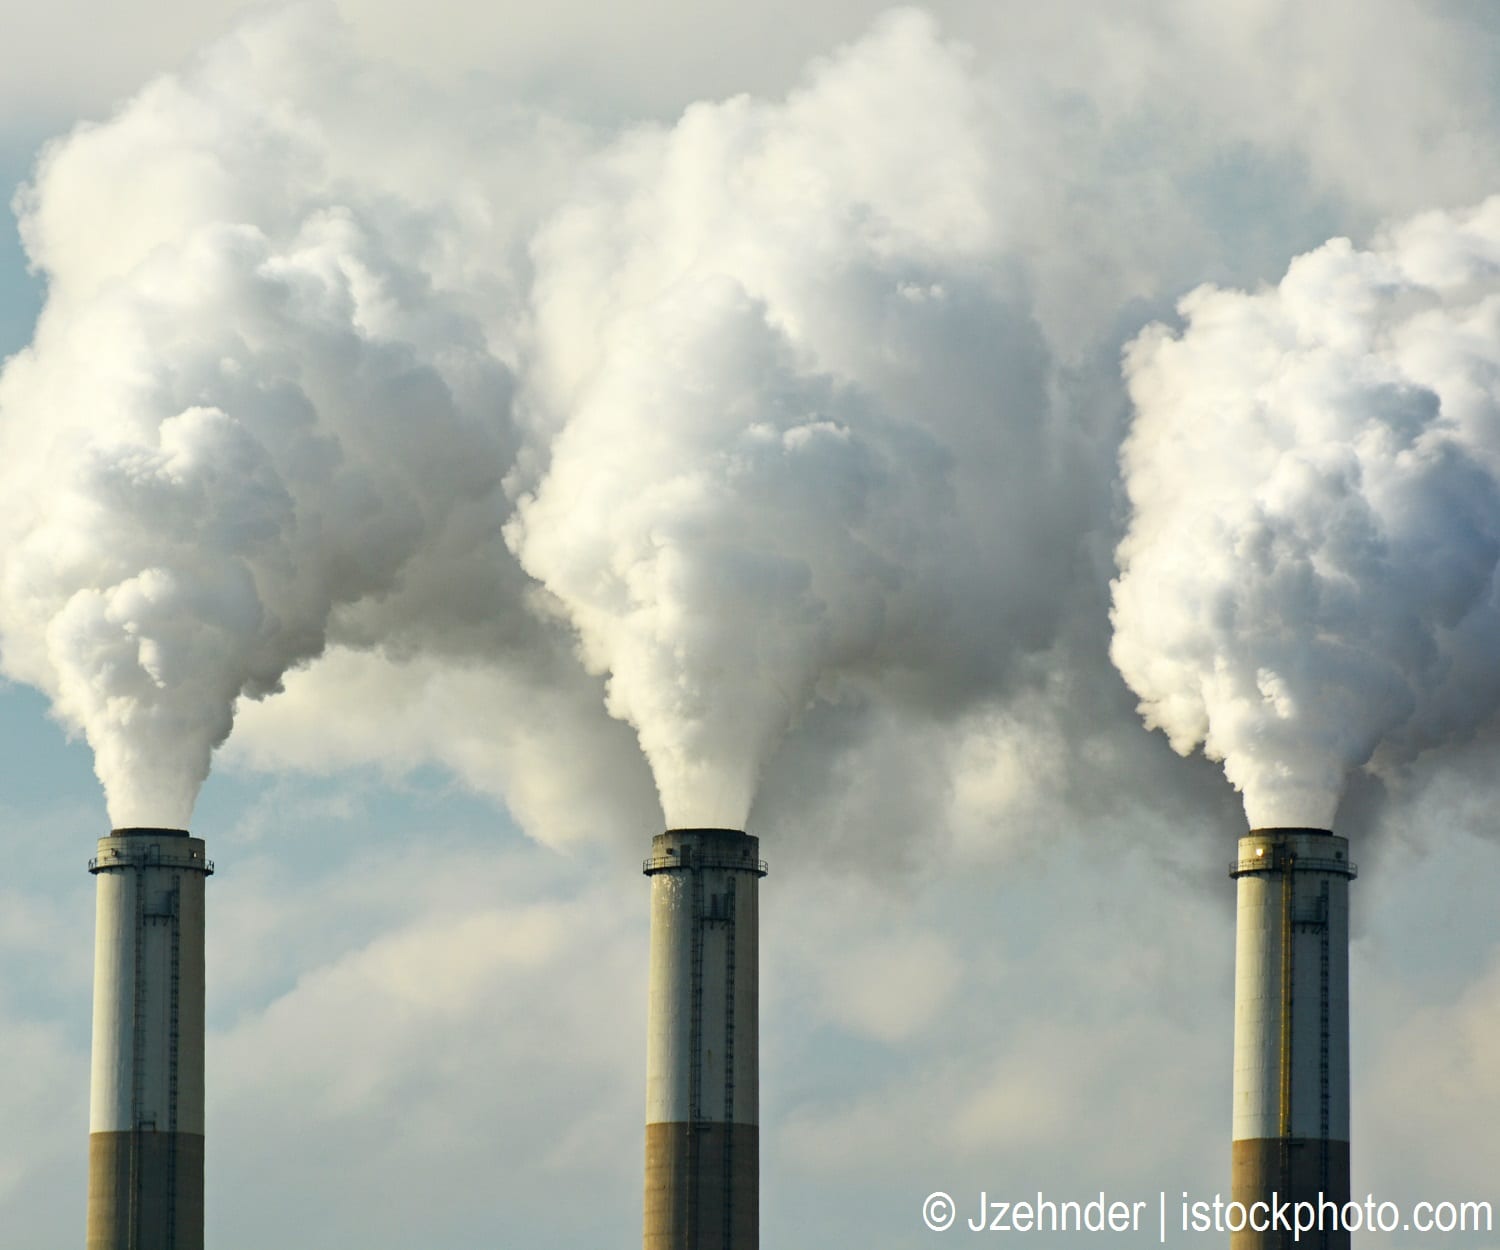 Smoke stacks at a power plant emitting smoke, a major source of air pollution.